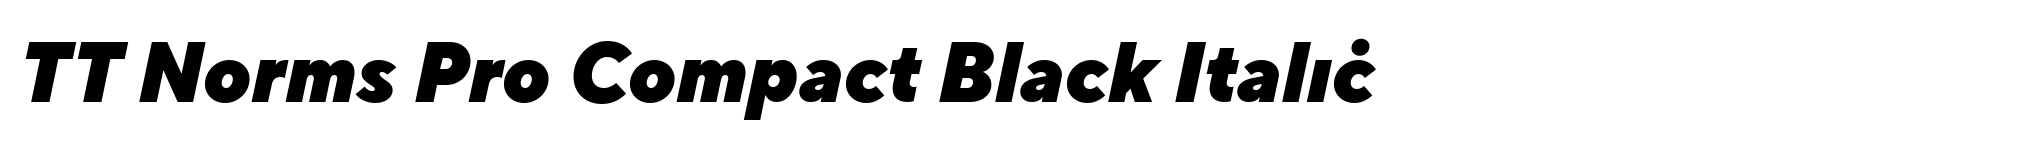 TT Norms Pro Compact Black Italic image